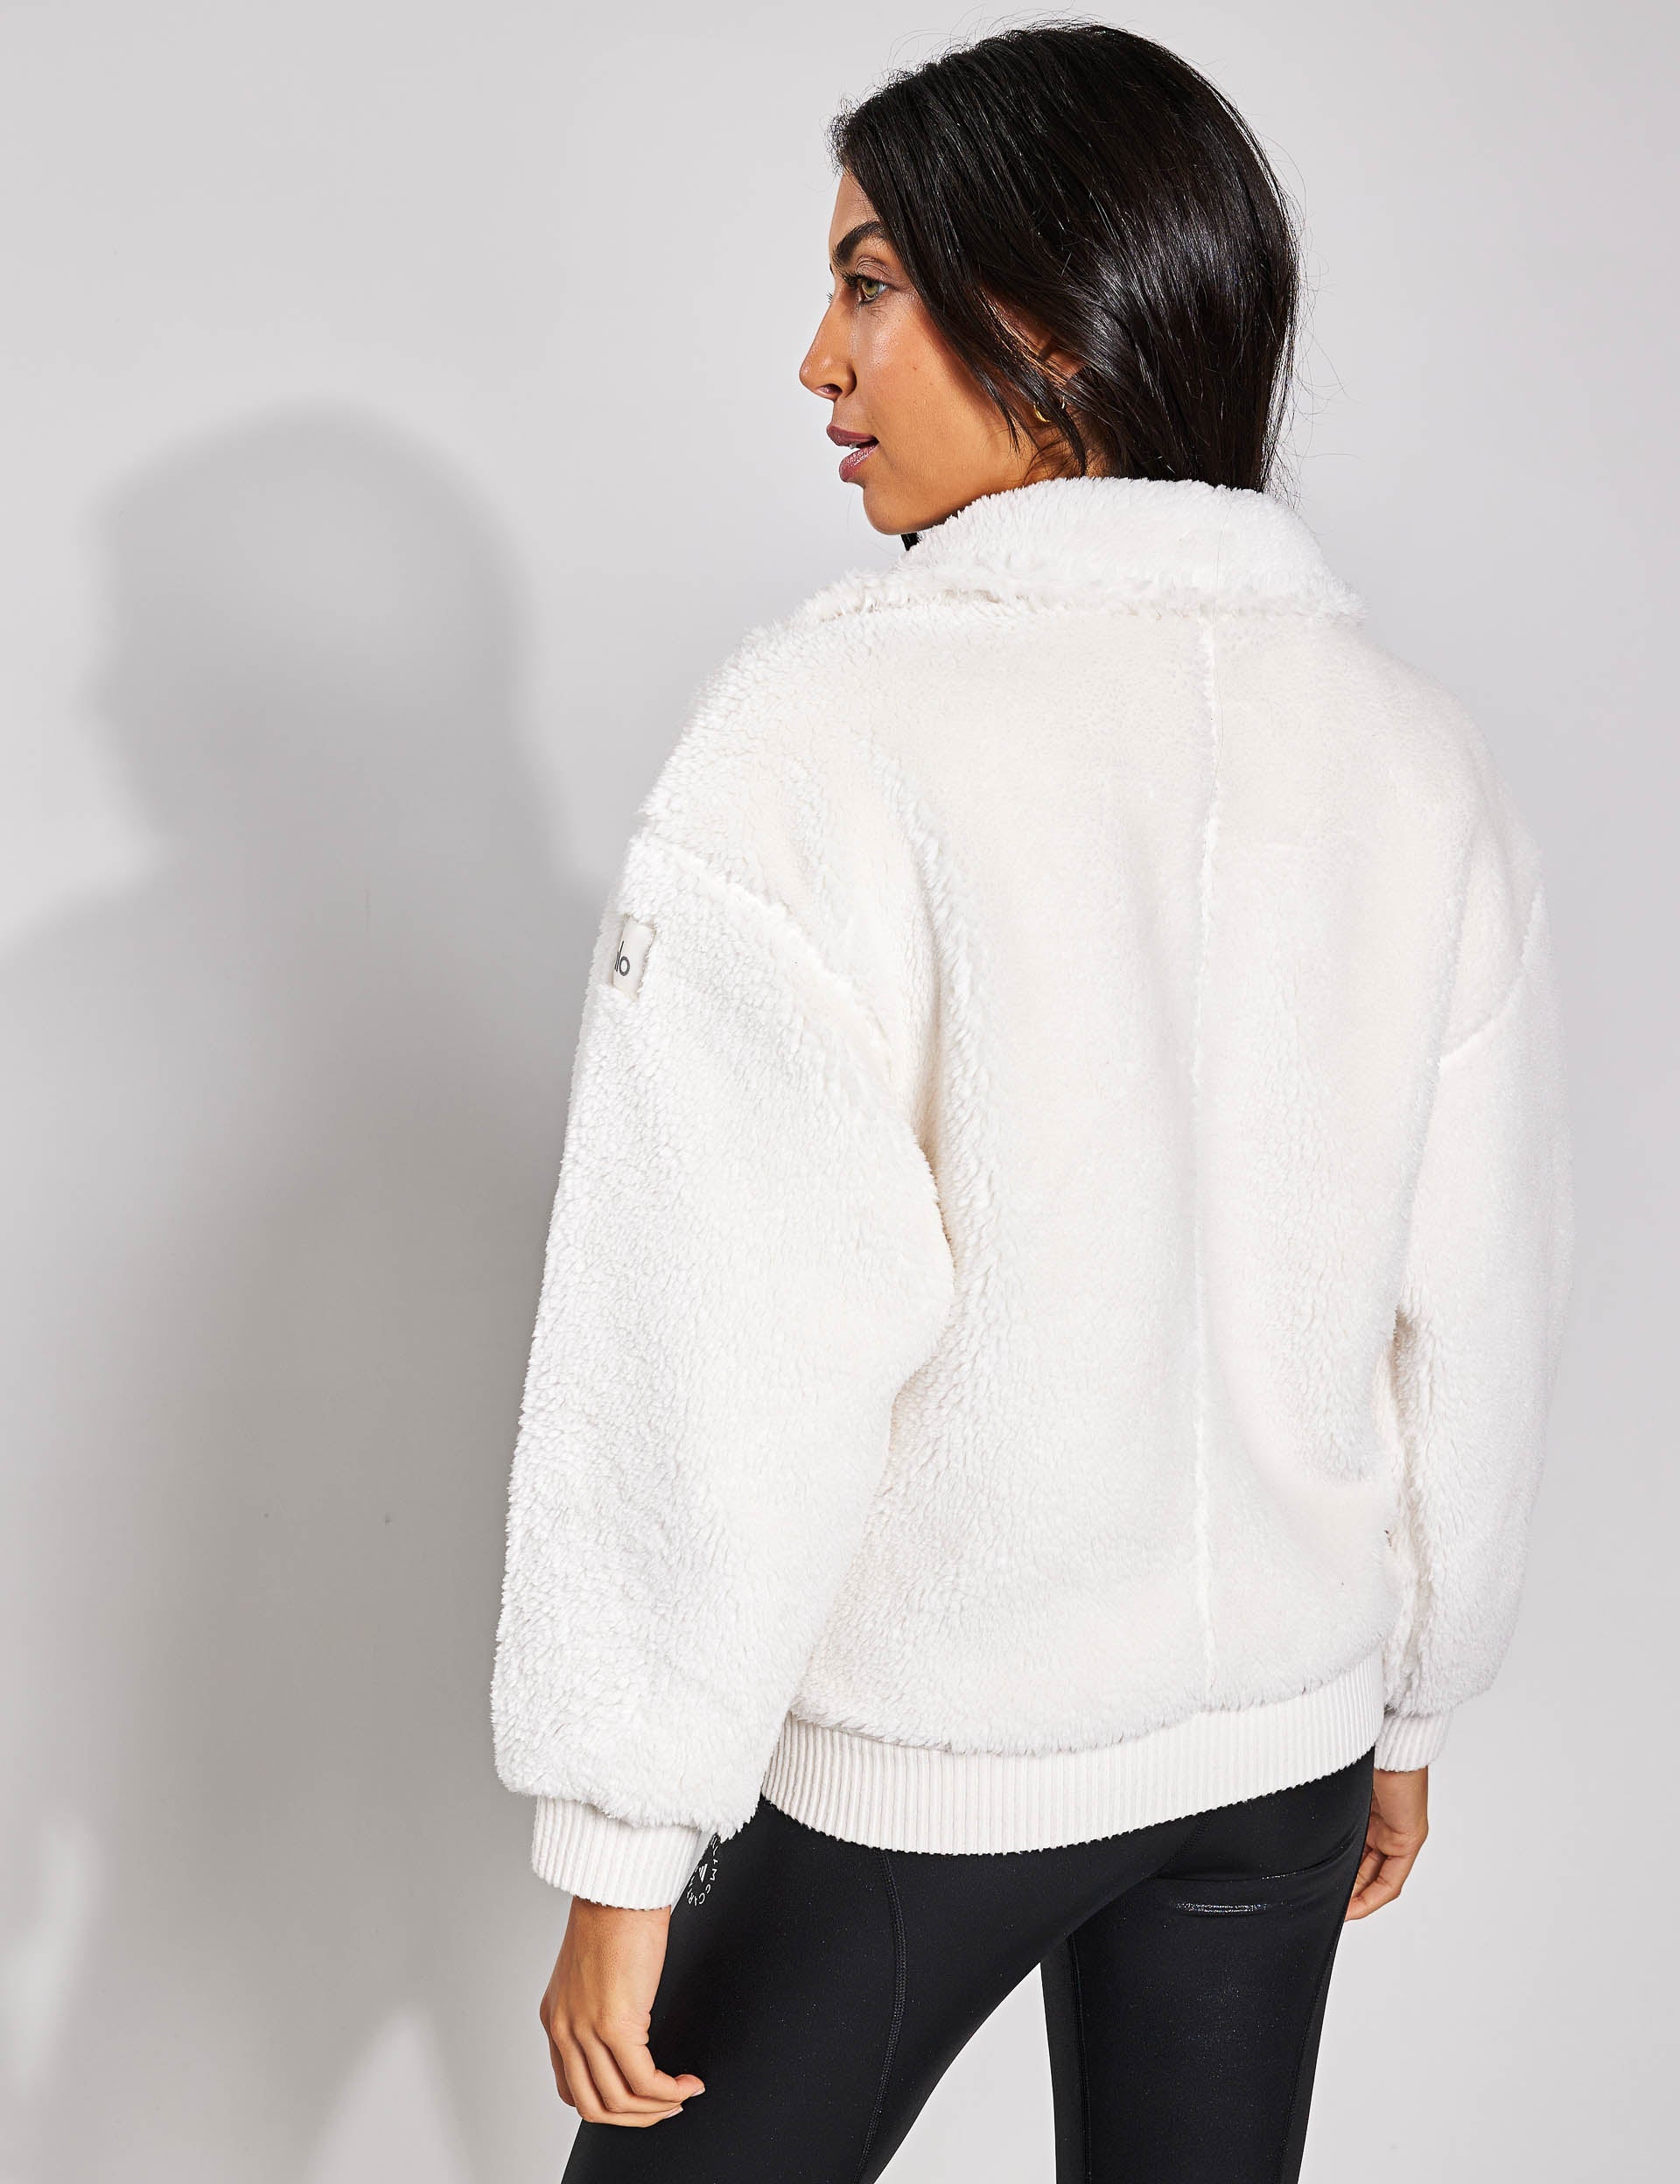 Alo Yoga Alo Sherpa Jacket - $115 (41% Off Retail) - From Liz